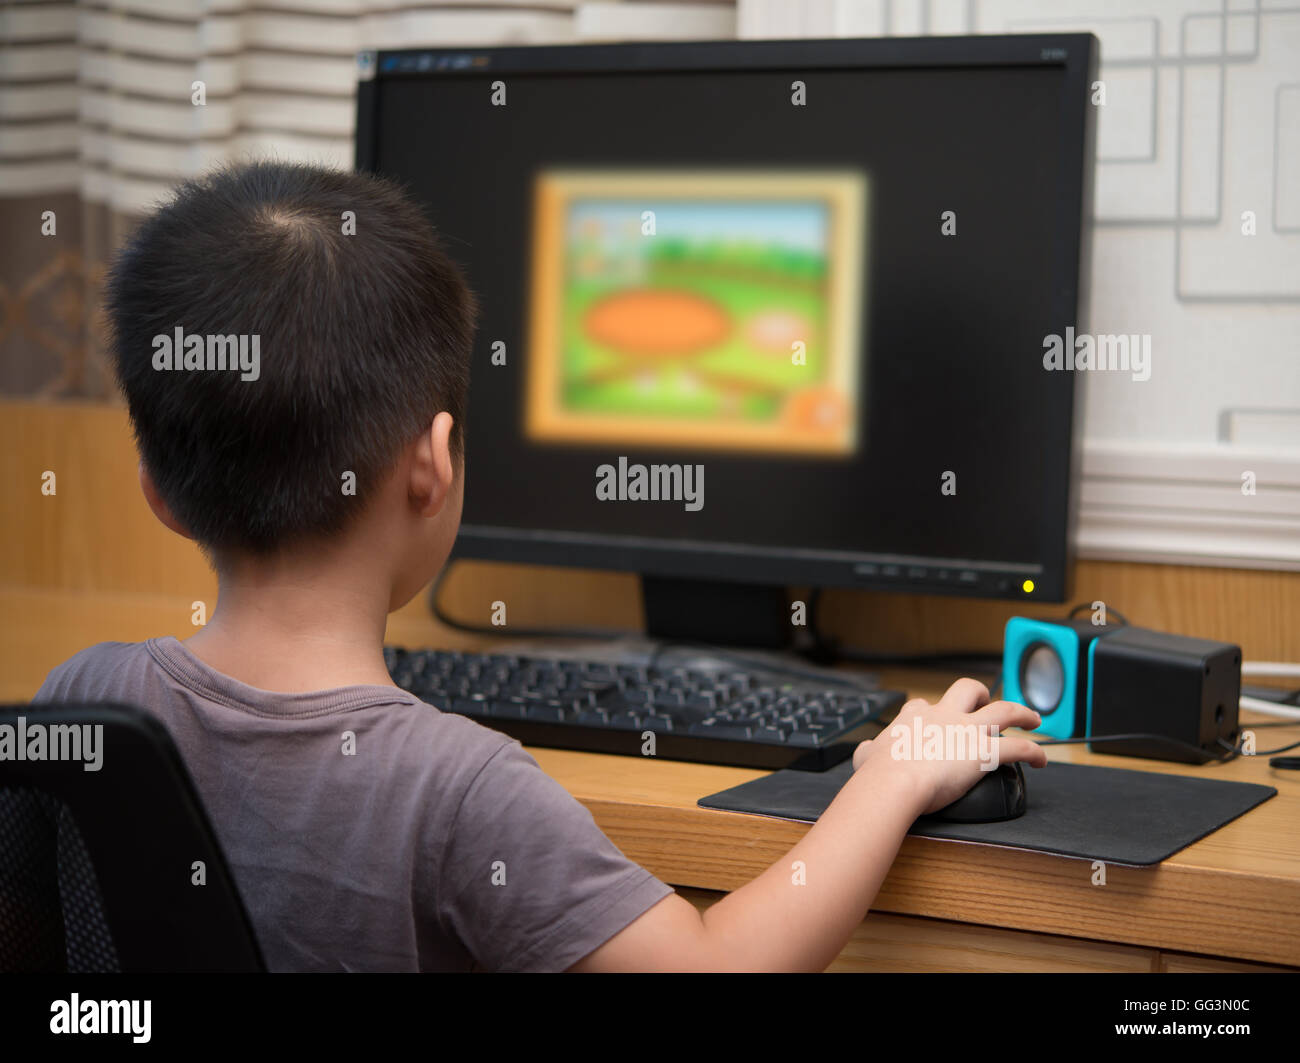 kids playing computer games